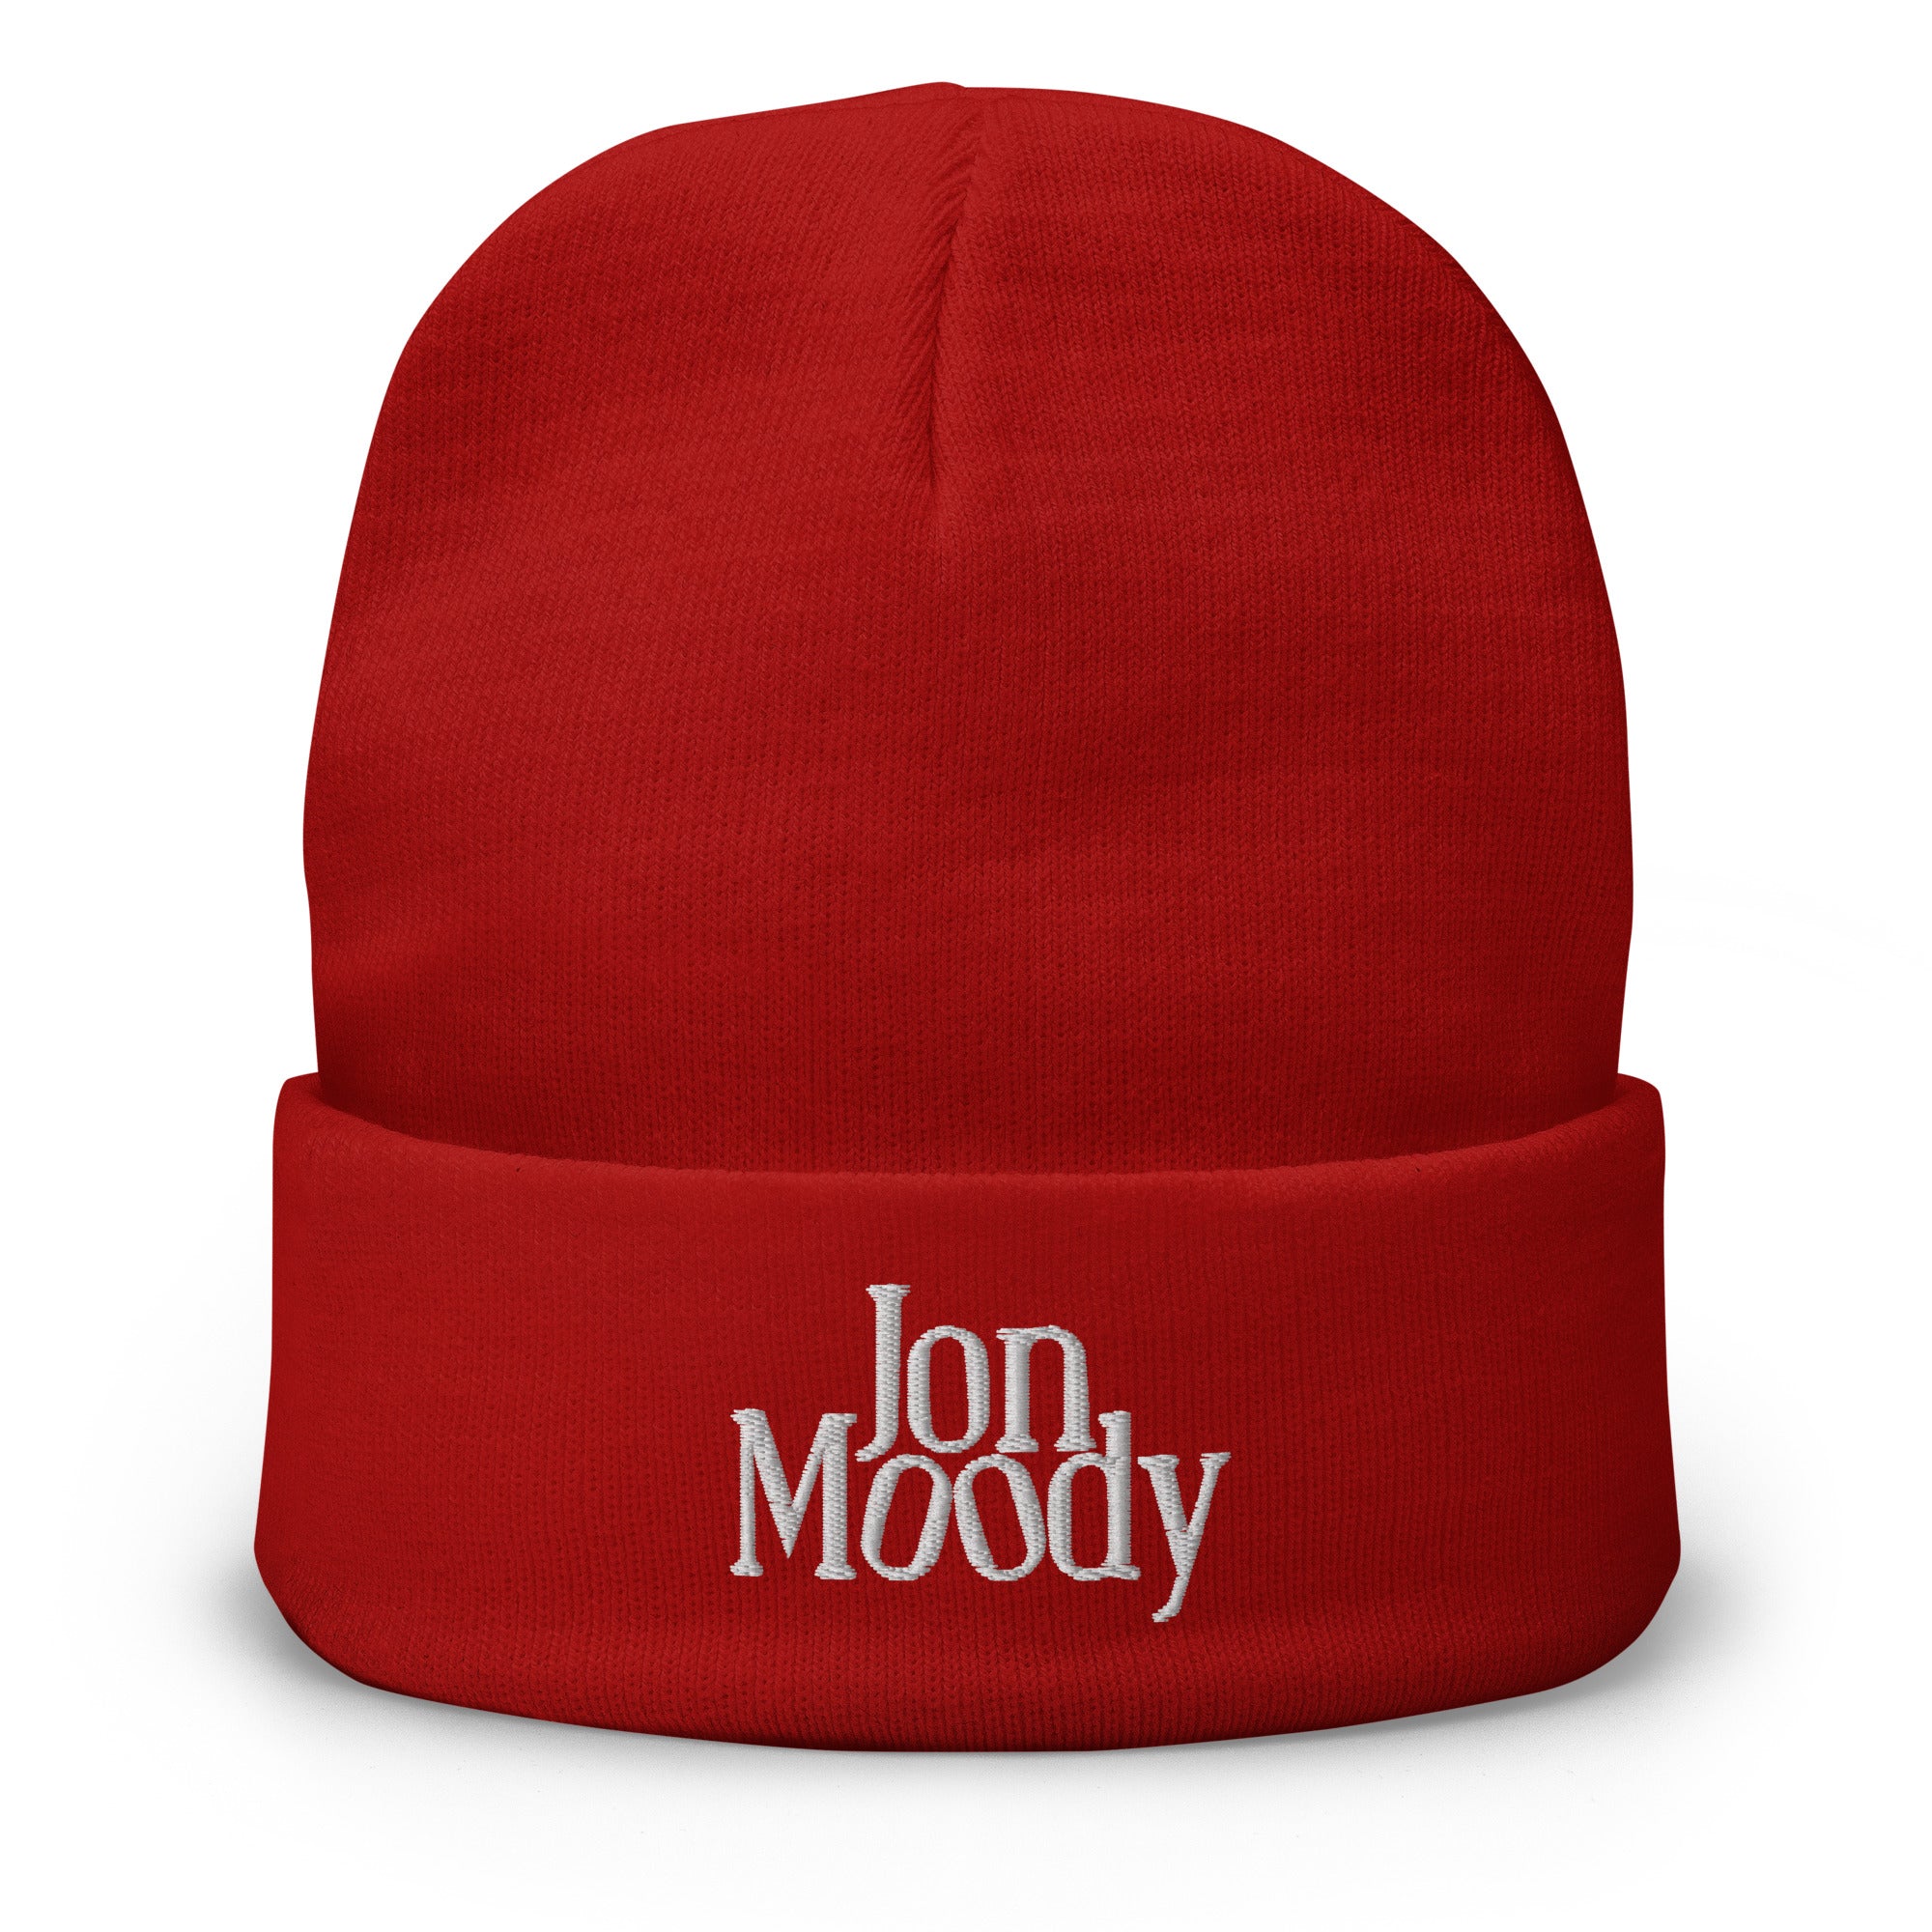 Jon Moody - Embroidered Beanie